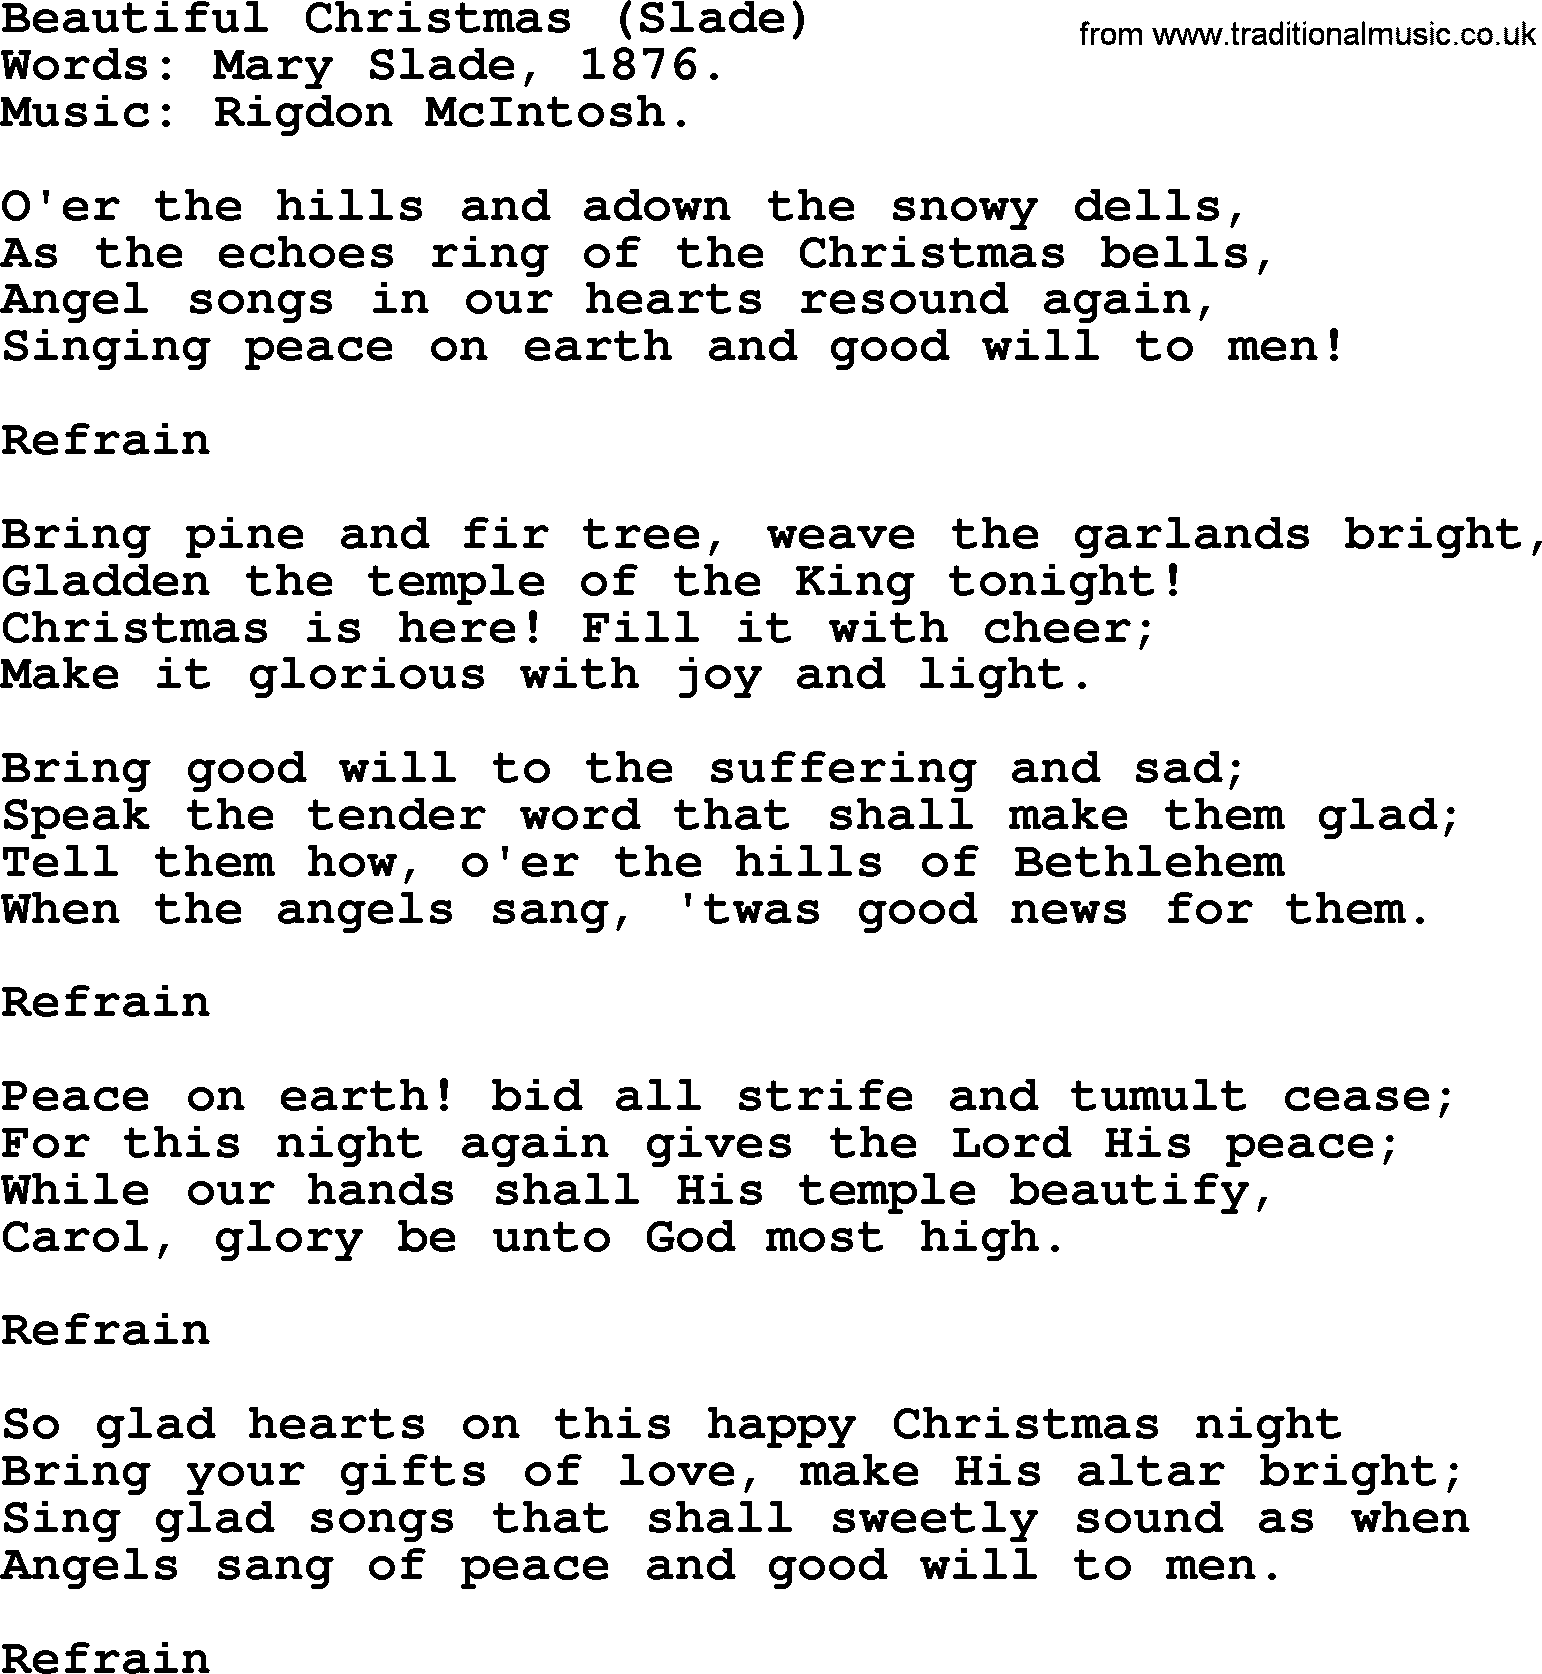 Christmas Hymns, Carols and Songs, title: Beautiful Christmas (slade), lyrics with PDF